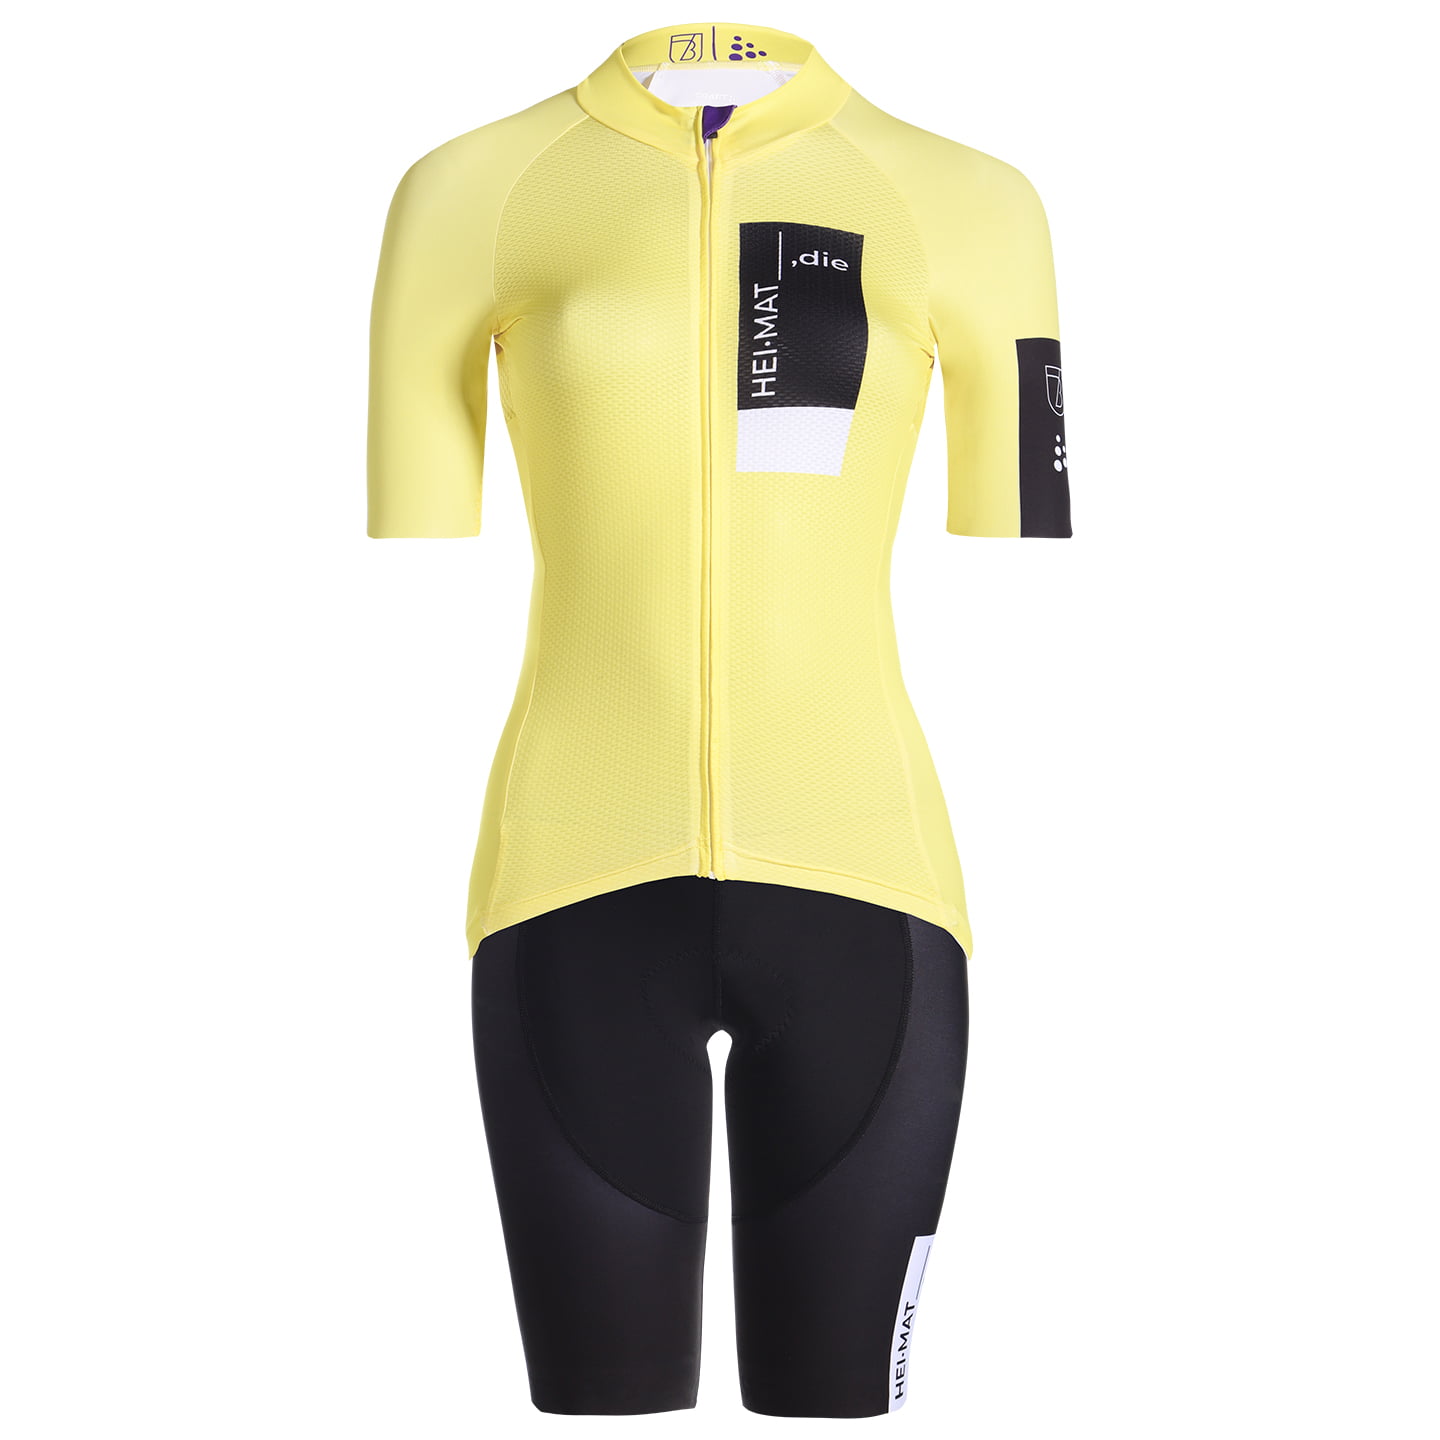 CRAFT Von Brokk - Die Heimat Aero Women’s Set (cycling jersey + cycling shorts) Women’s Set (2 pieces), Cycling clothing